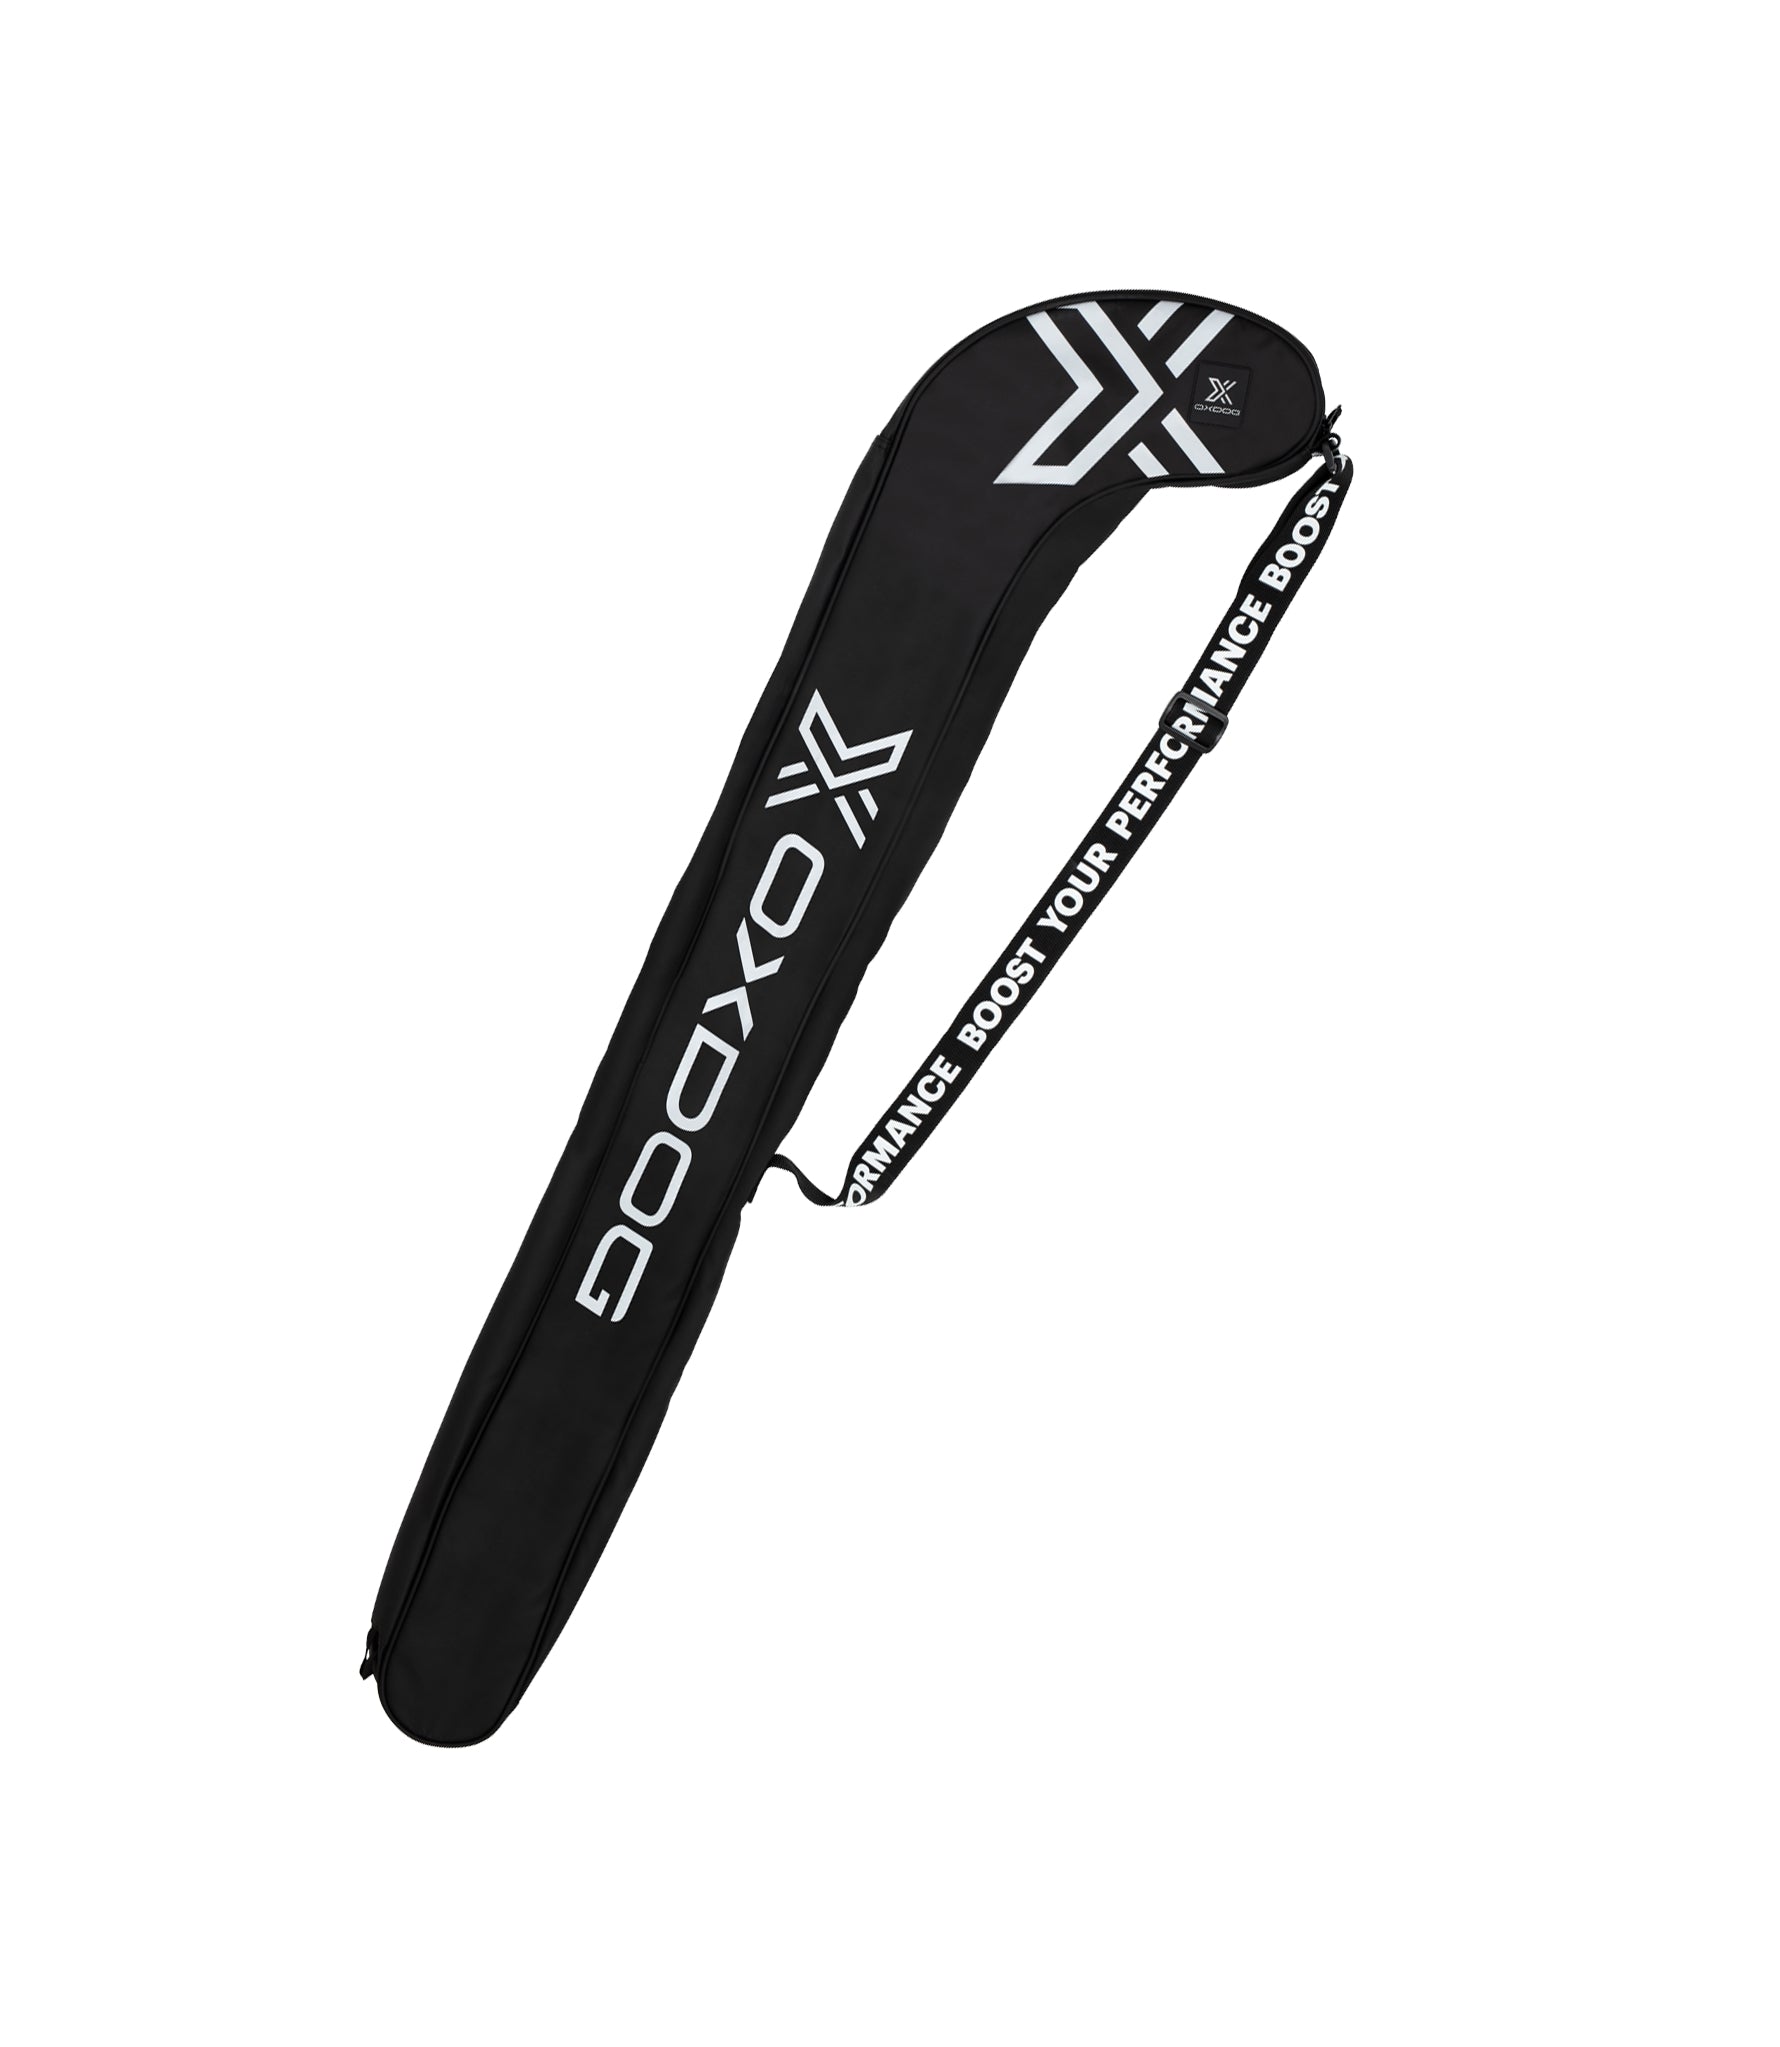 Oxdog OX1 Stickbag SR Black/White, Svart/Vitt klubbfodral för seniorer från Oxdog